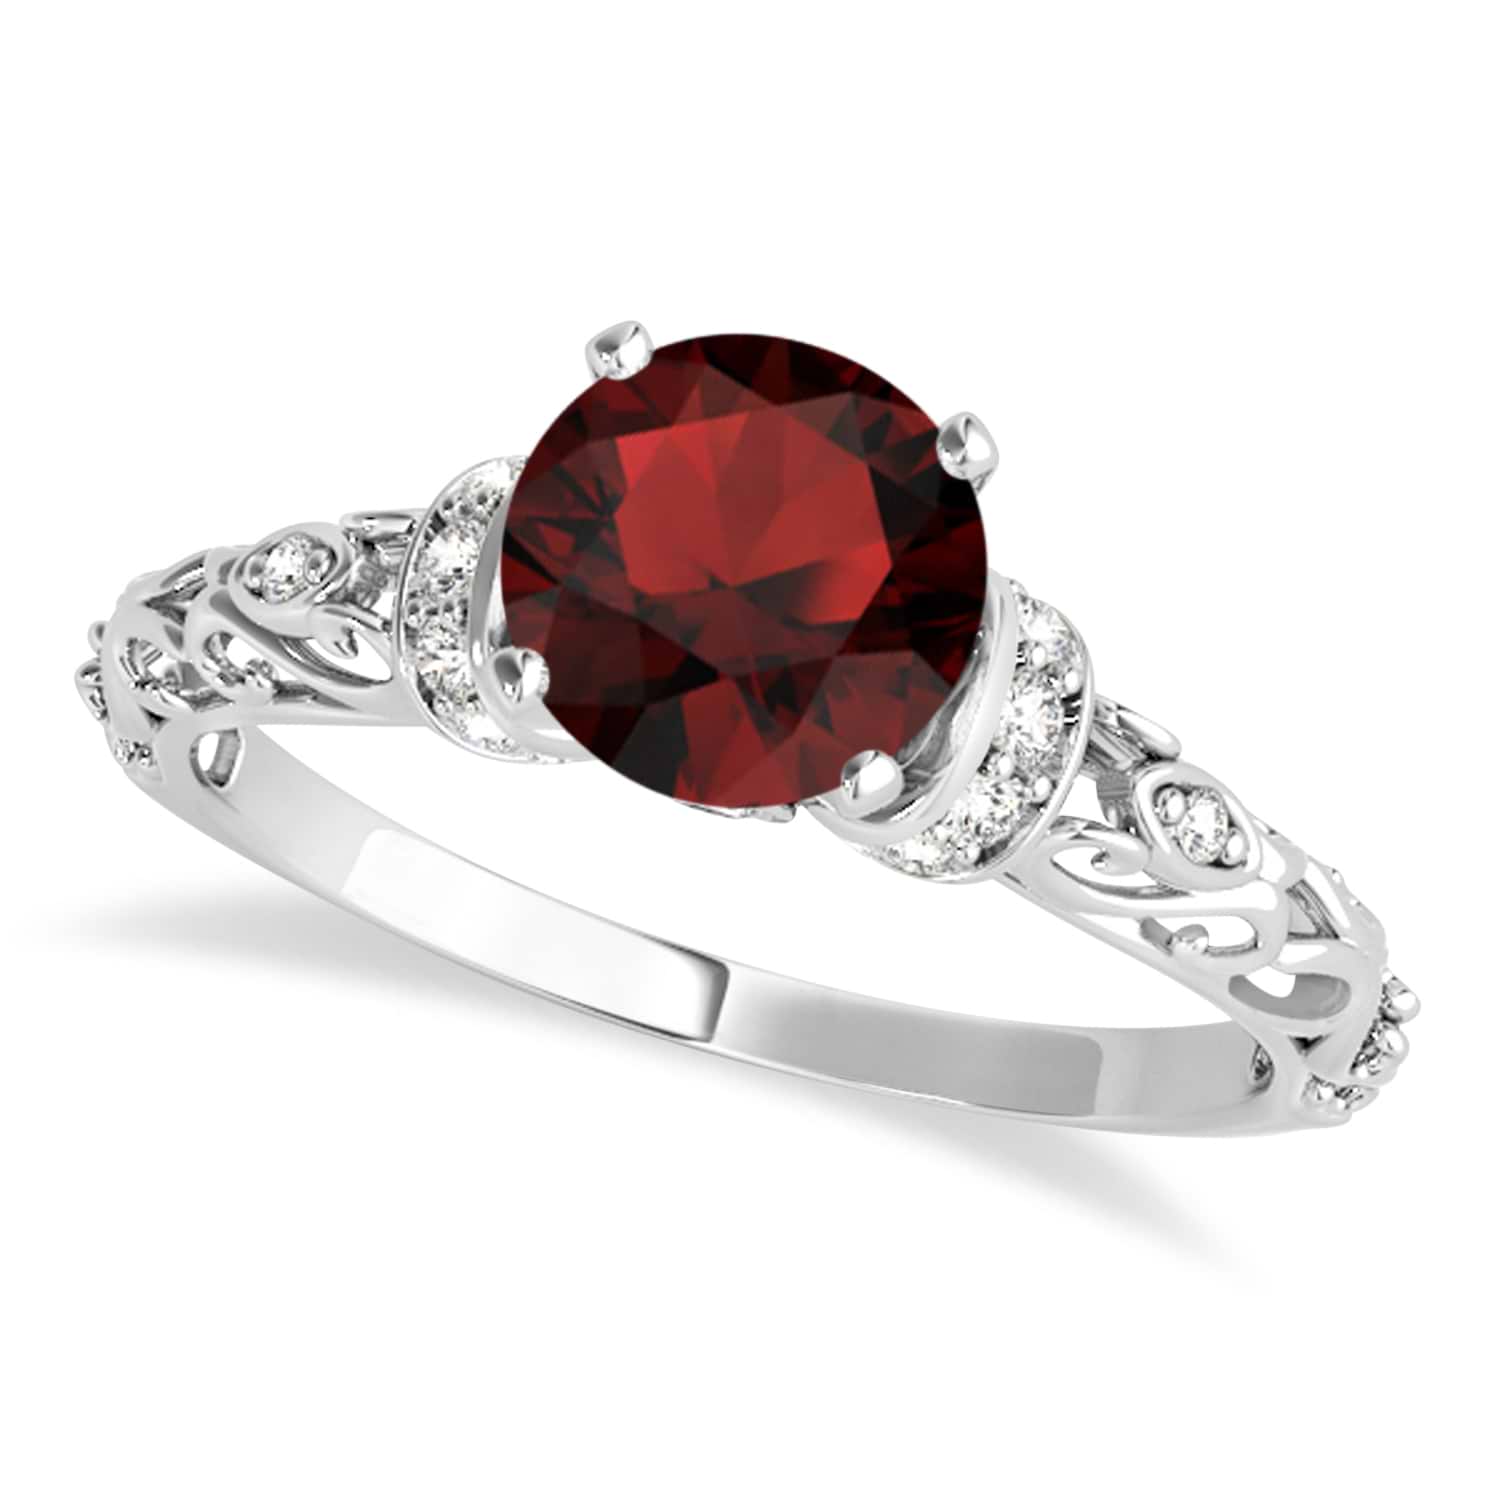 Garnet & Diamond Antique Style Engagement Ring 14k White Gold (1.62ct)